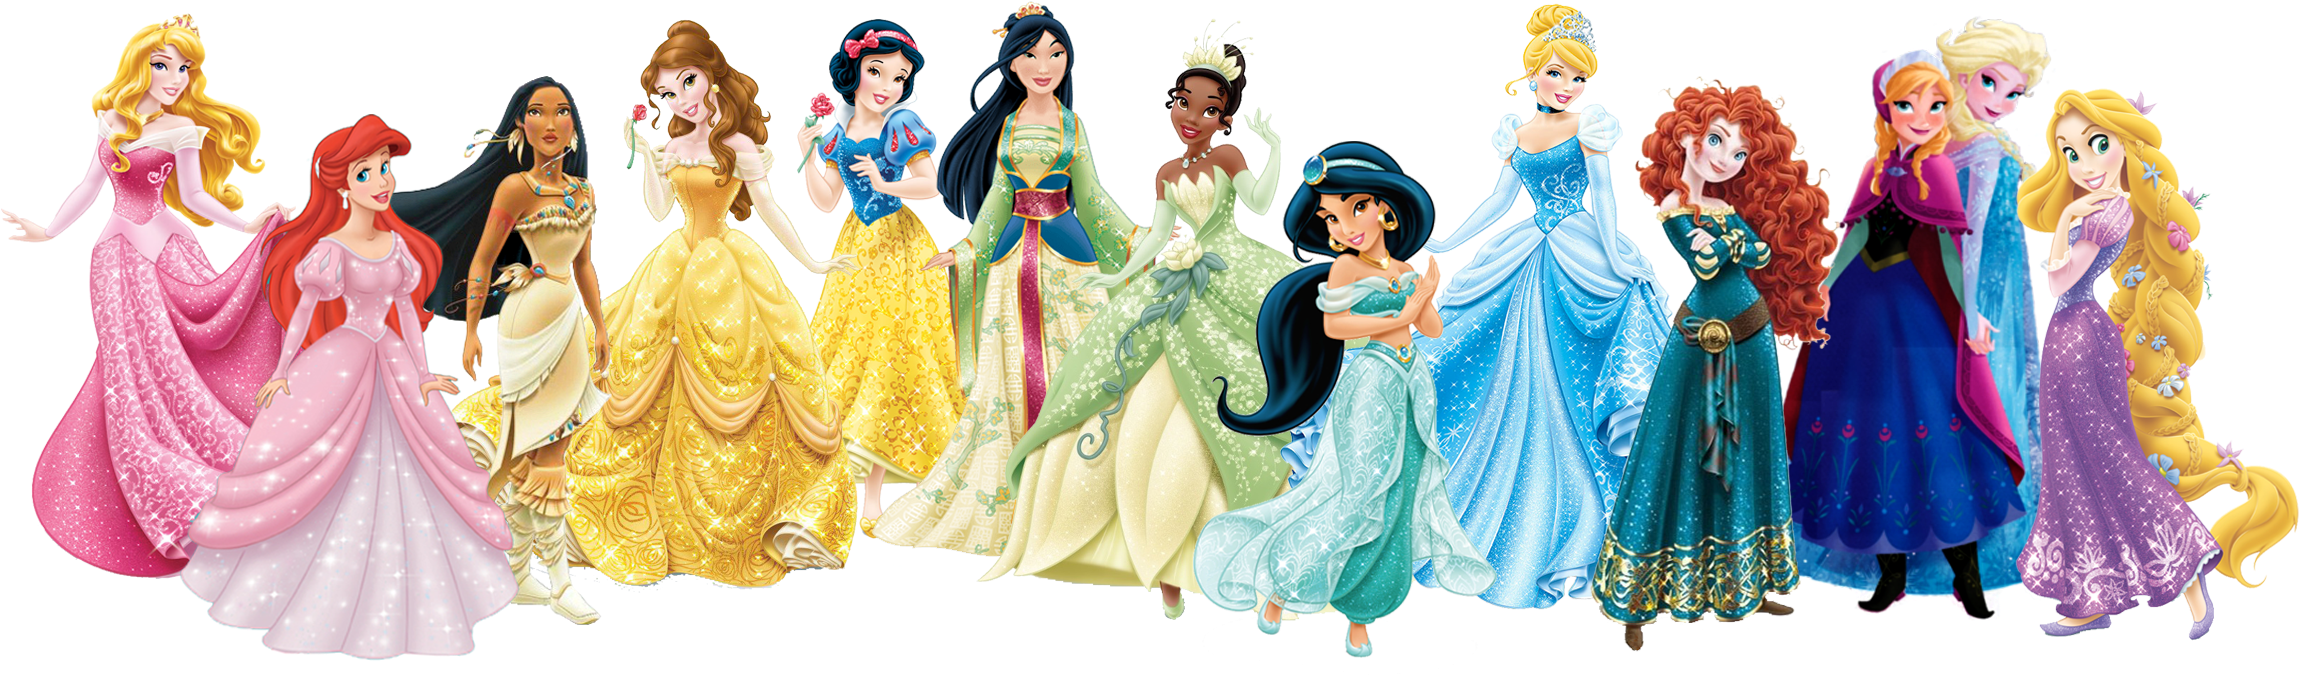 Disney Princesses Png Picture - All Disney Princess 2018 (2419x768), Png Download